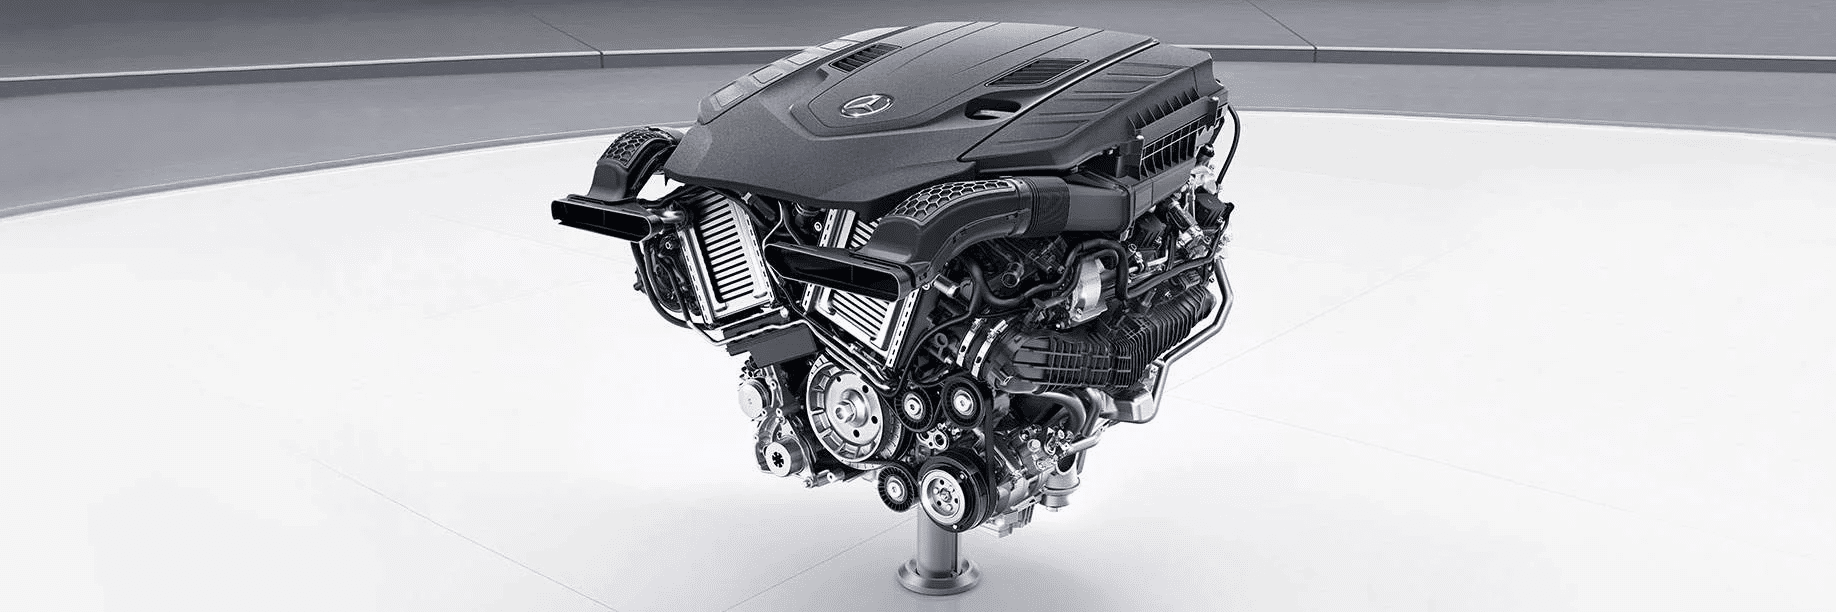 Технические характеристики Mercedes Maybach S-class Седан Сравнение двигателей